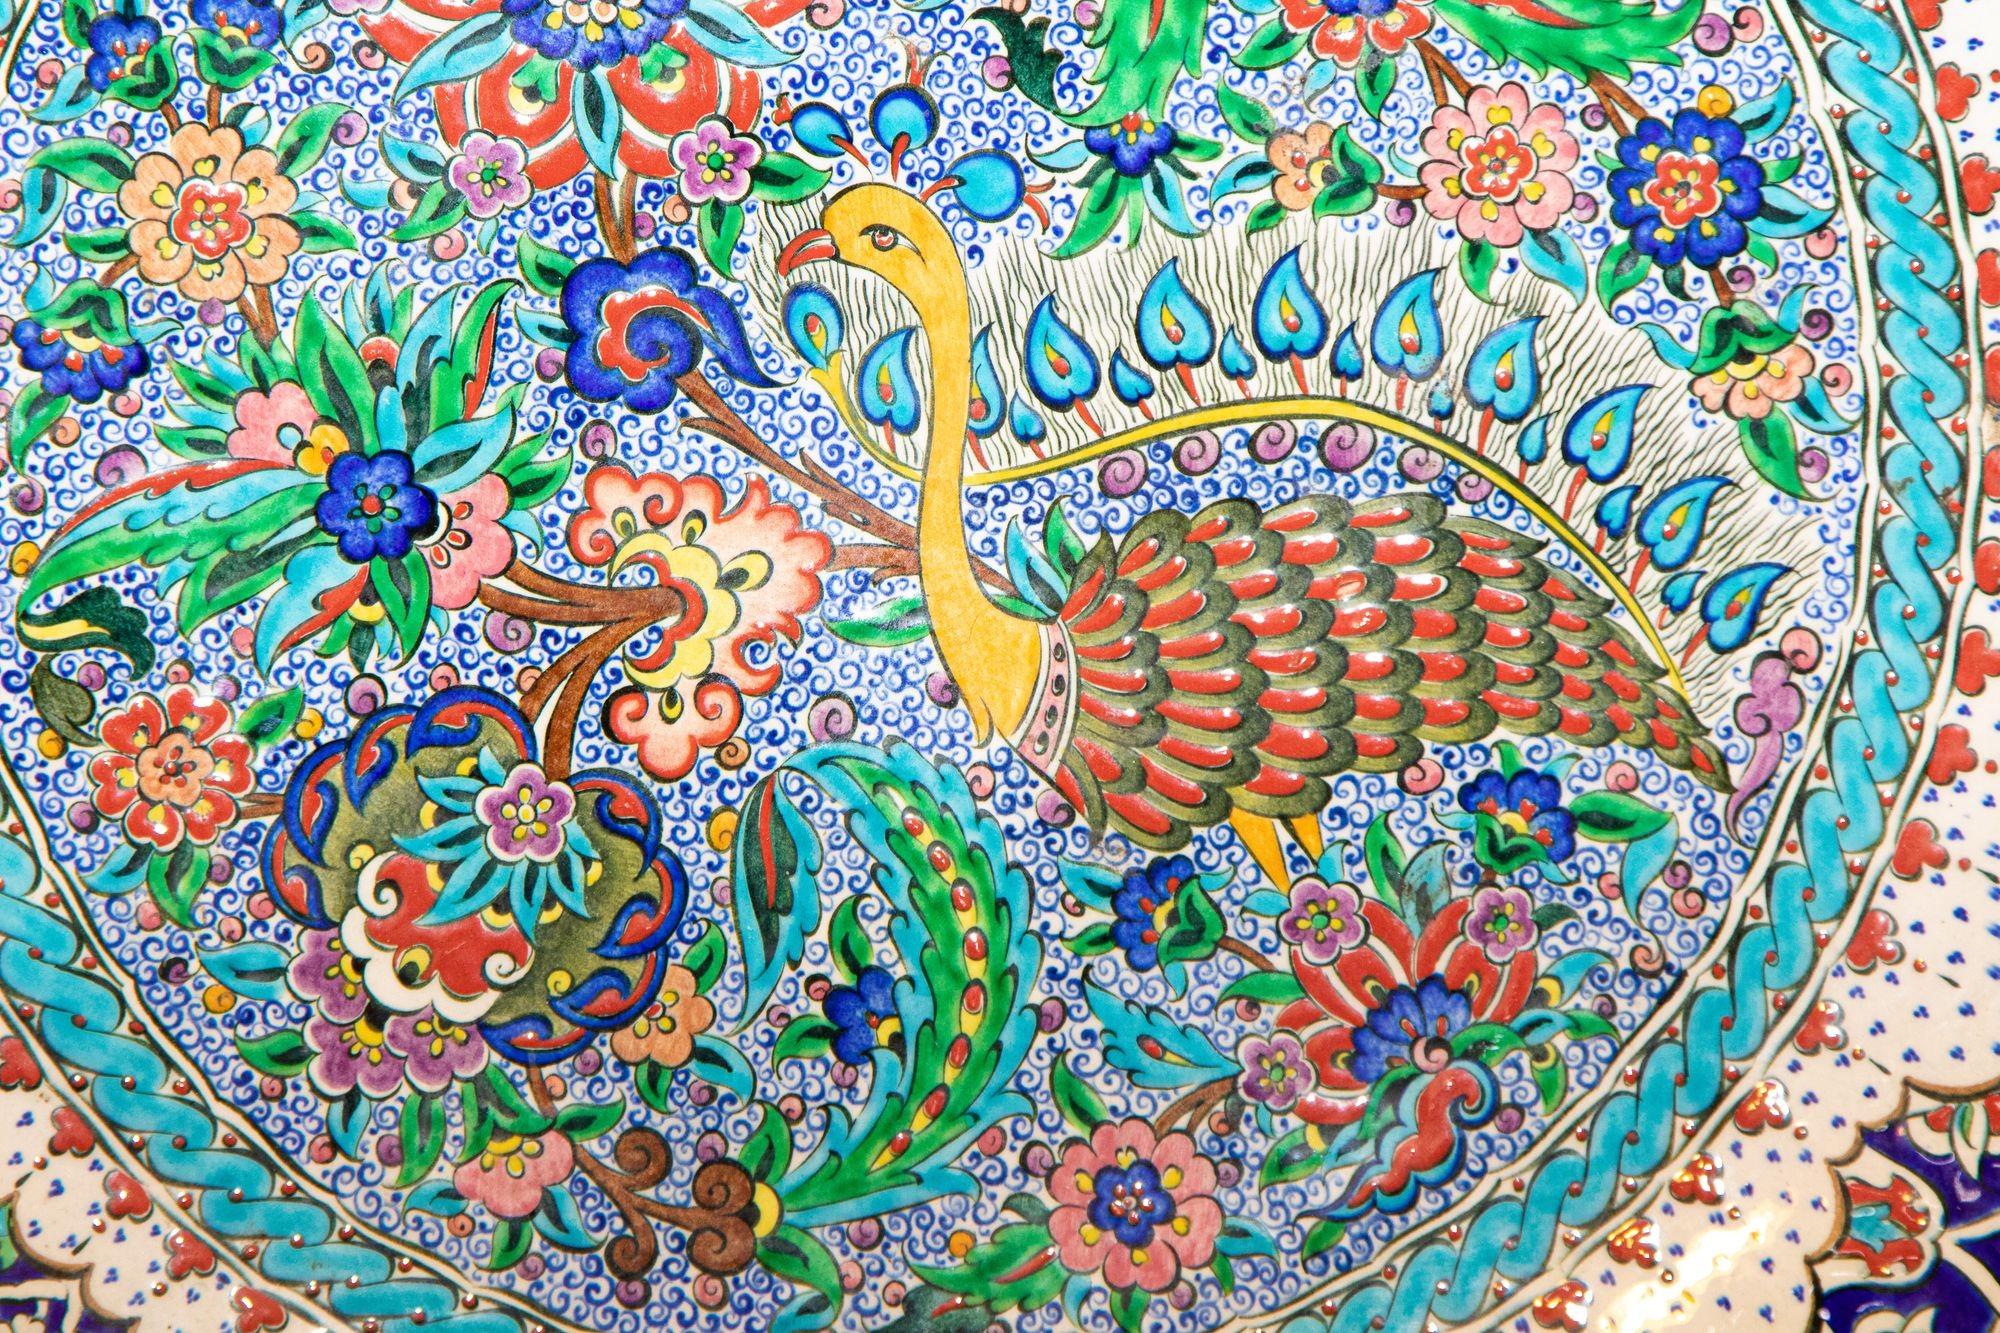 20th Century Hand Painted Decorative Plate After an Original Iznik 16th C. Ottoman Design